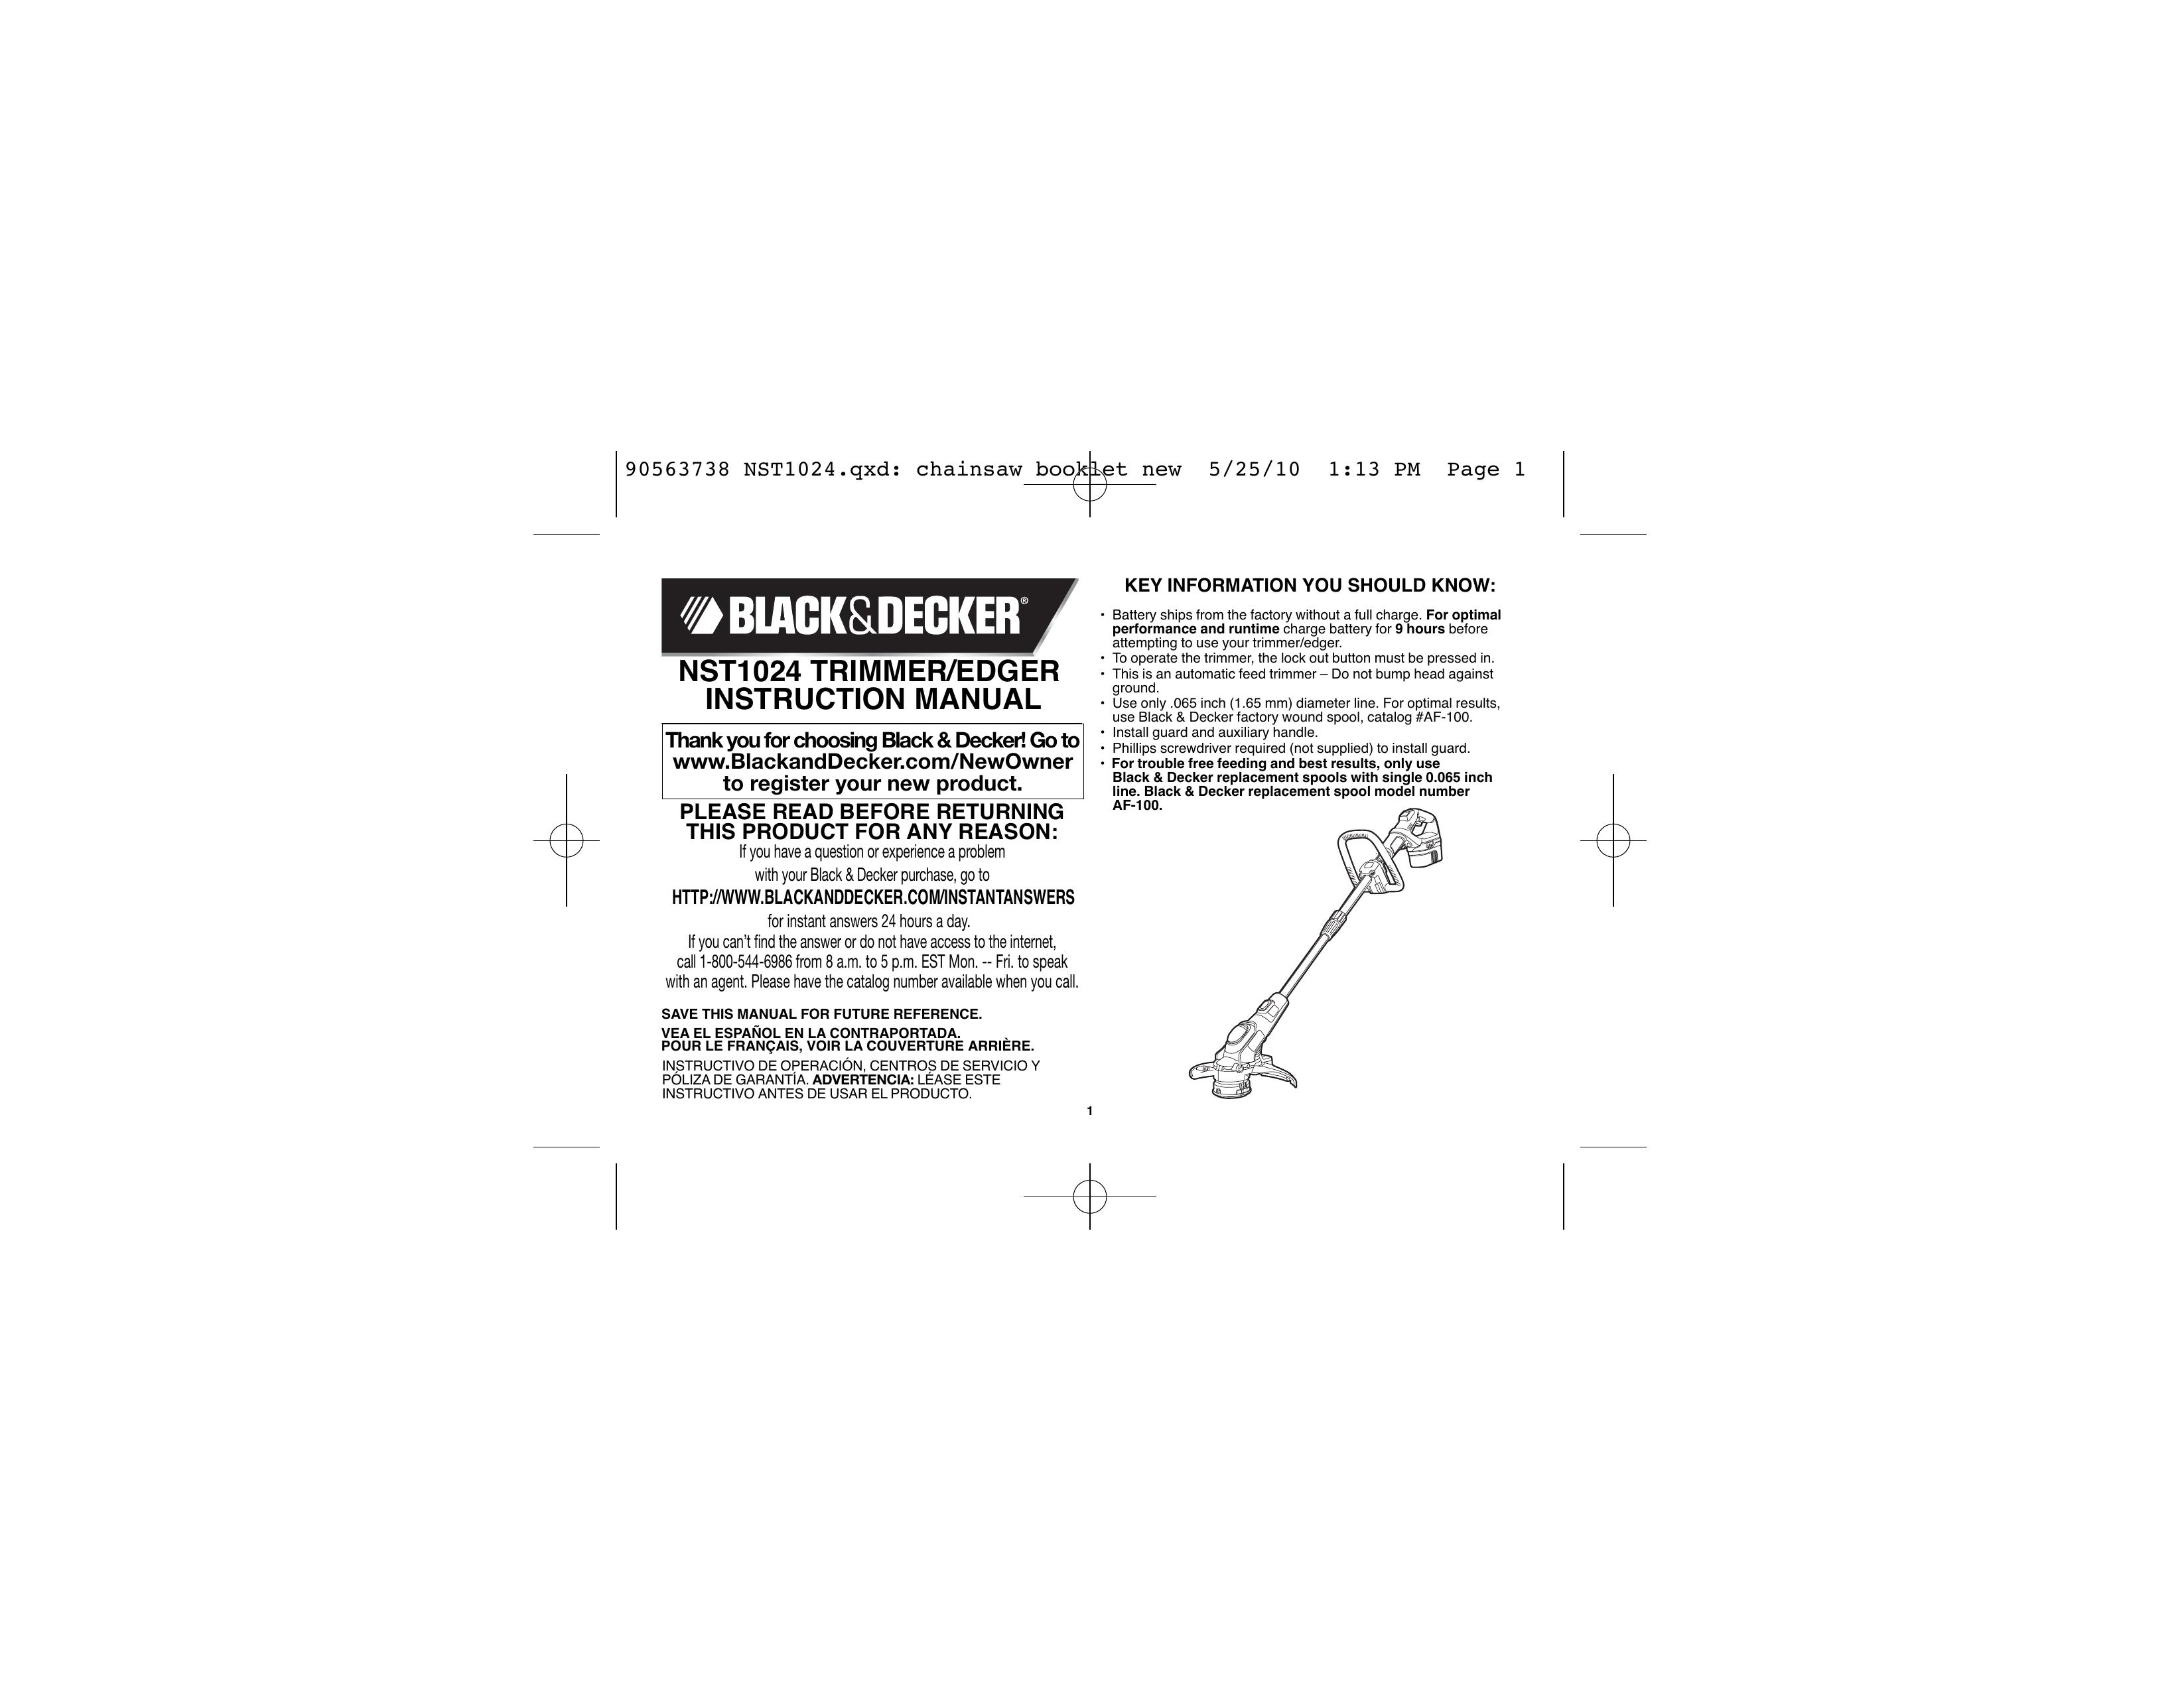 Black & Decker 90563738 Trimmer User Manual